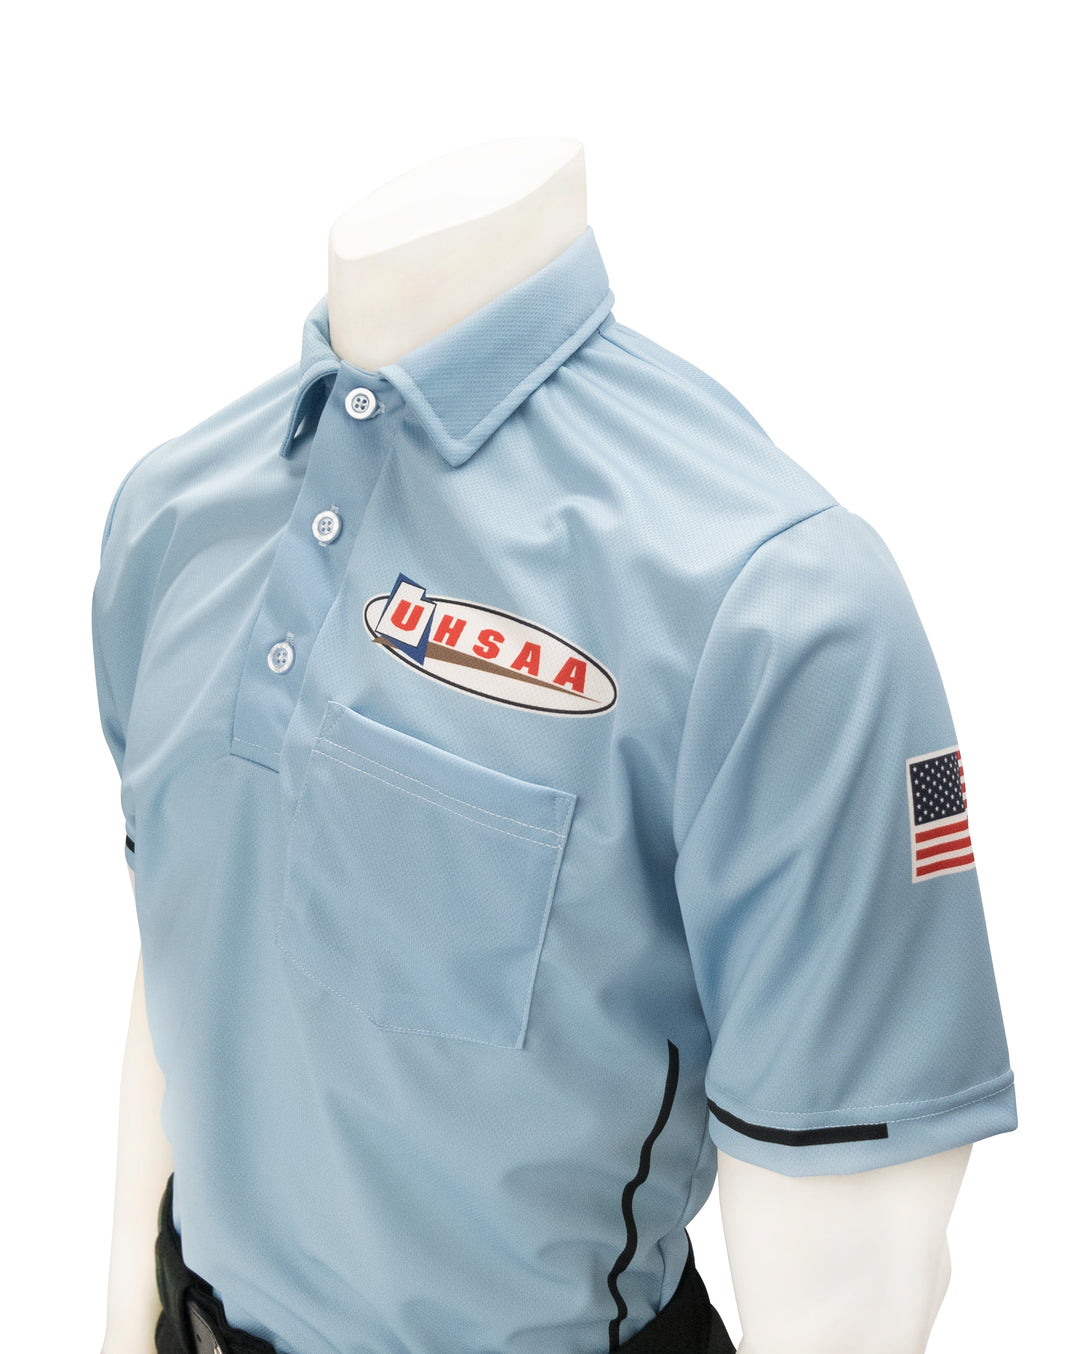 USA310UT - Smitty "Made in USA" - Baseball Men's Short Sleeve Shirt Powder Blue